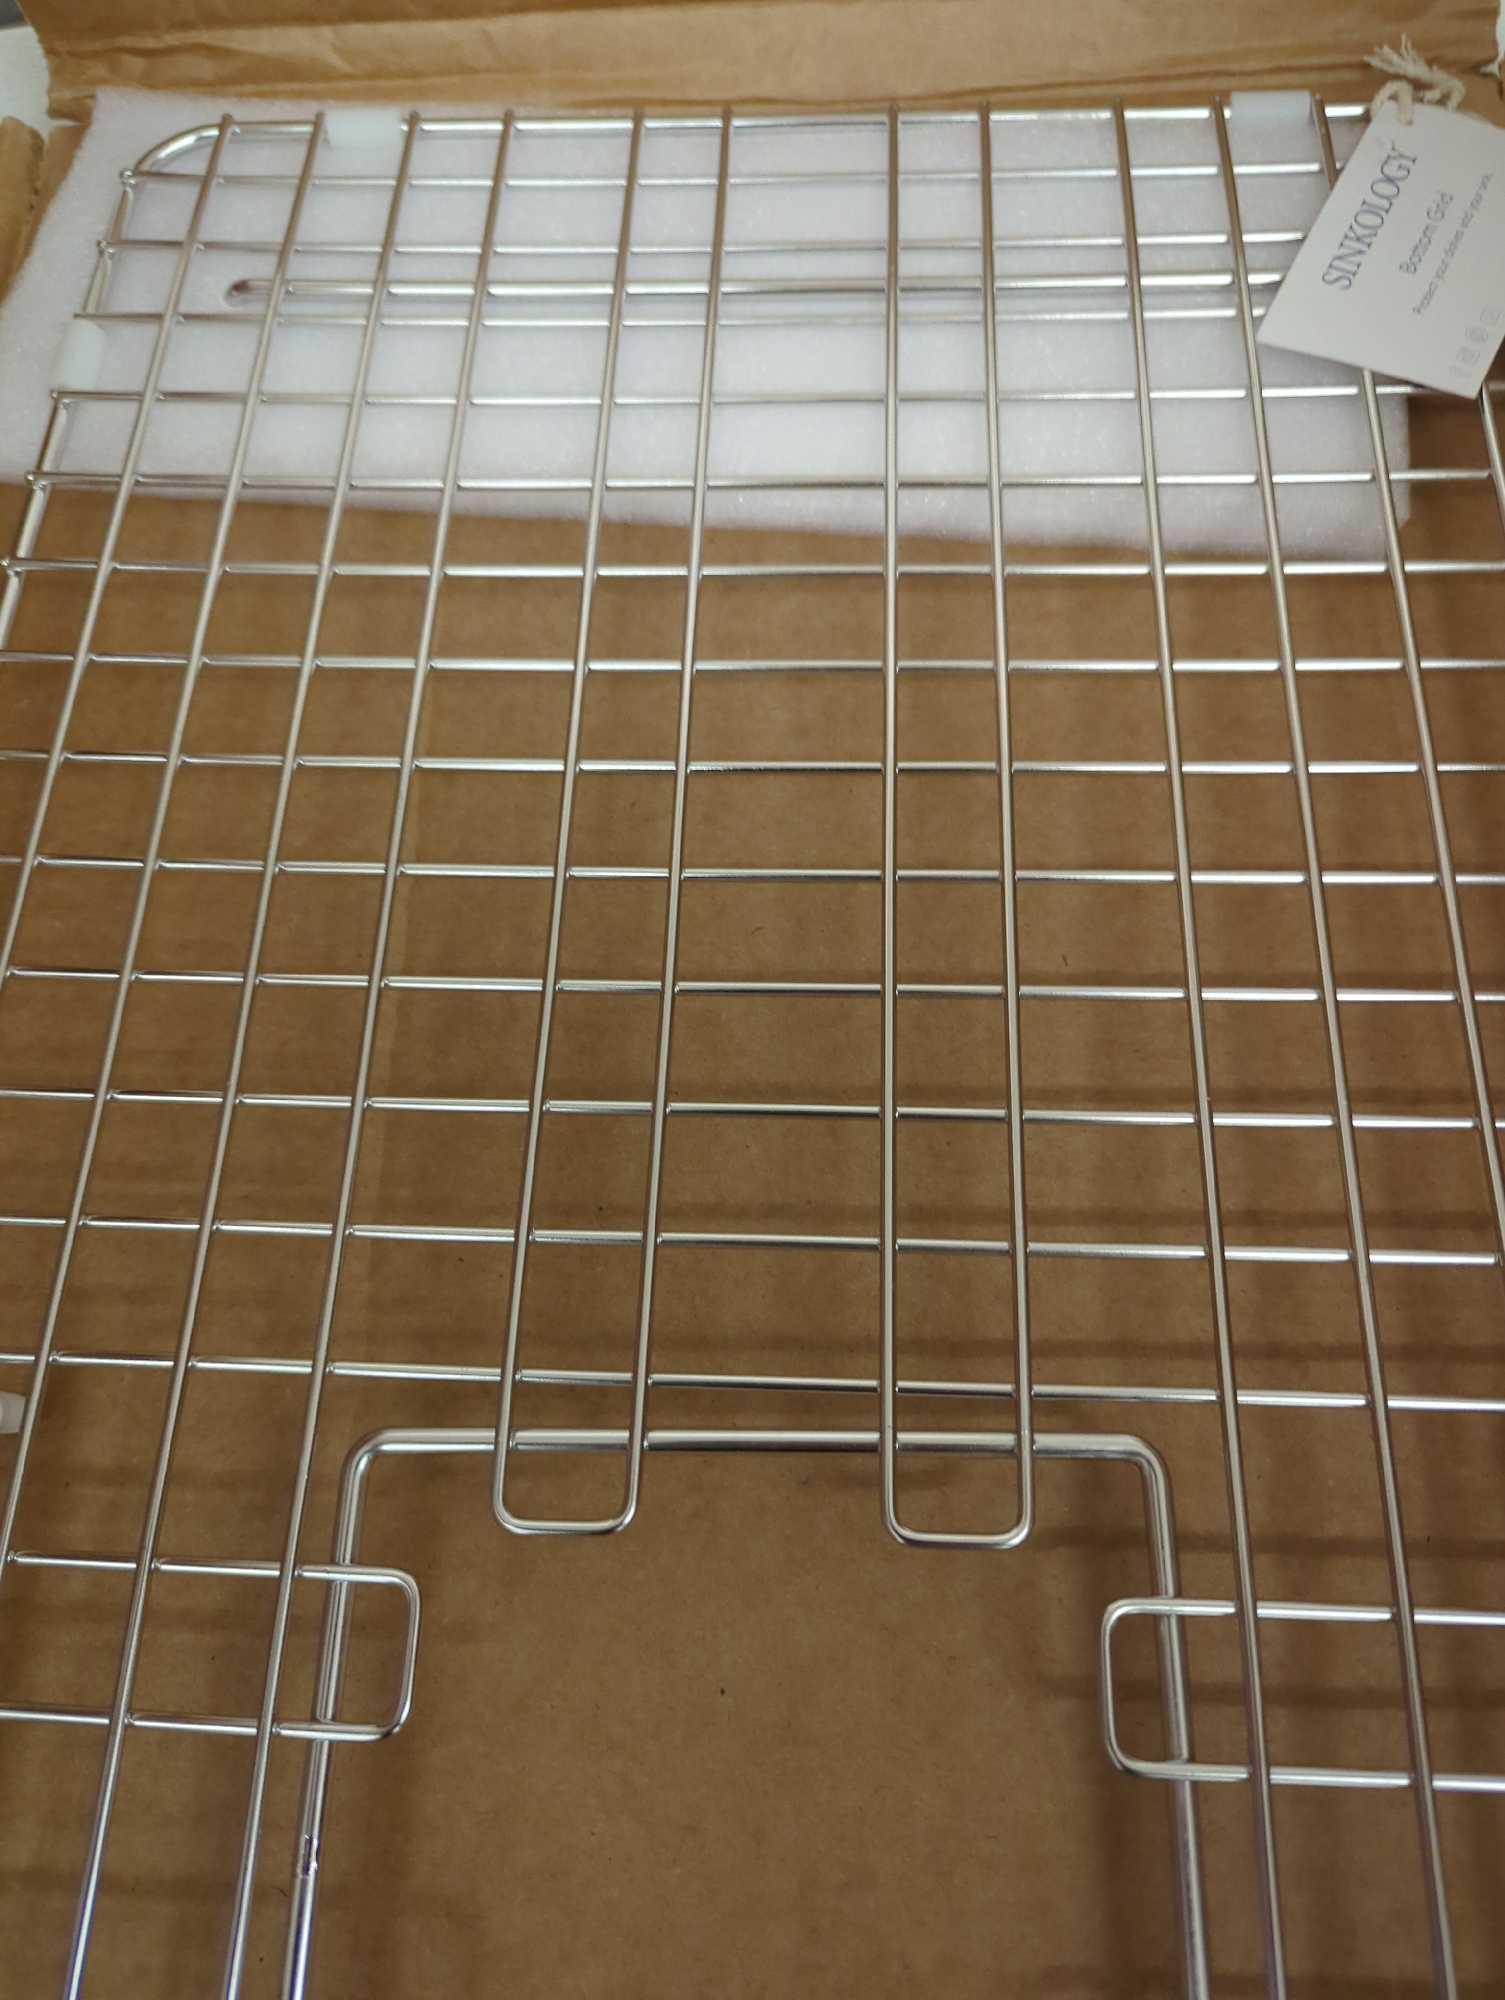 Sinkology SinkSense Kitchen Sink Bottom Grid in Stainless Steel, Dimensions - 14" x 31.5", Retail